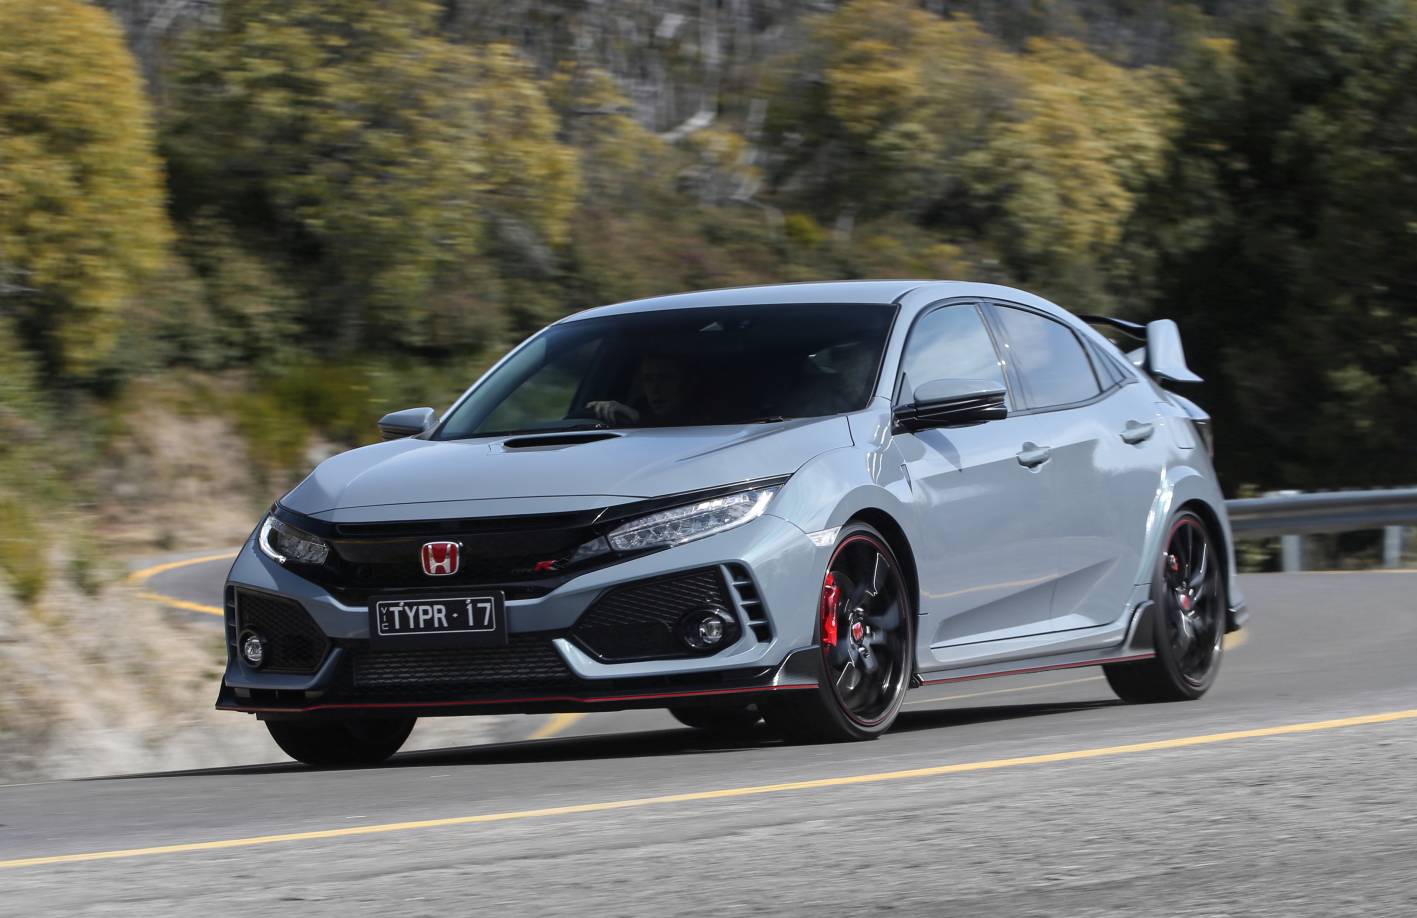 Honda Civic Type R soon receiving minor updates – report